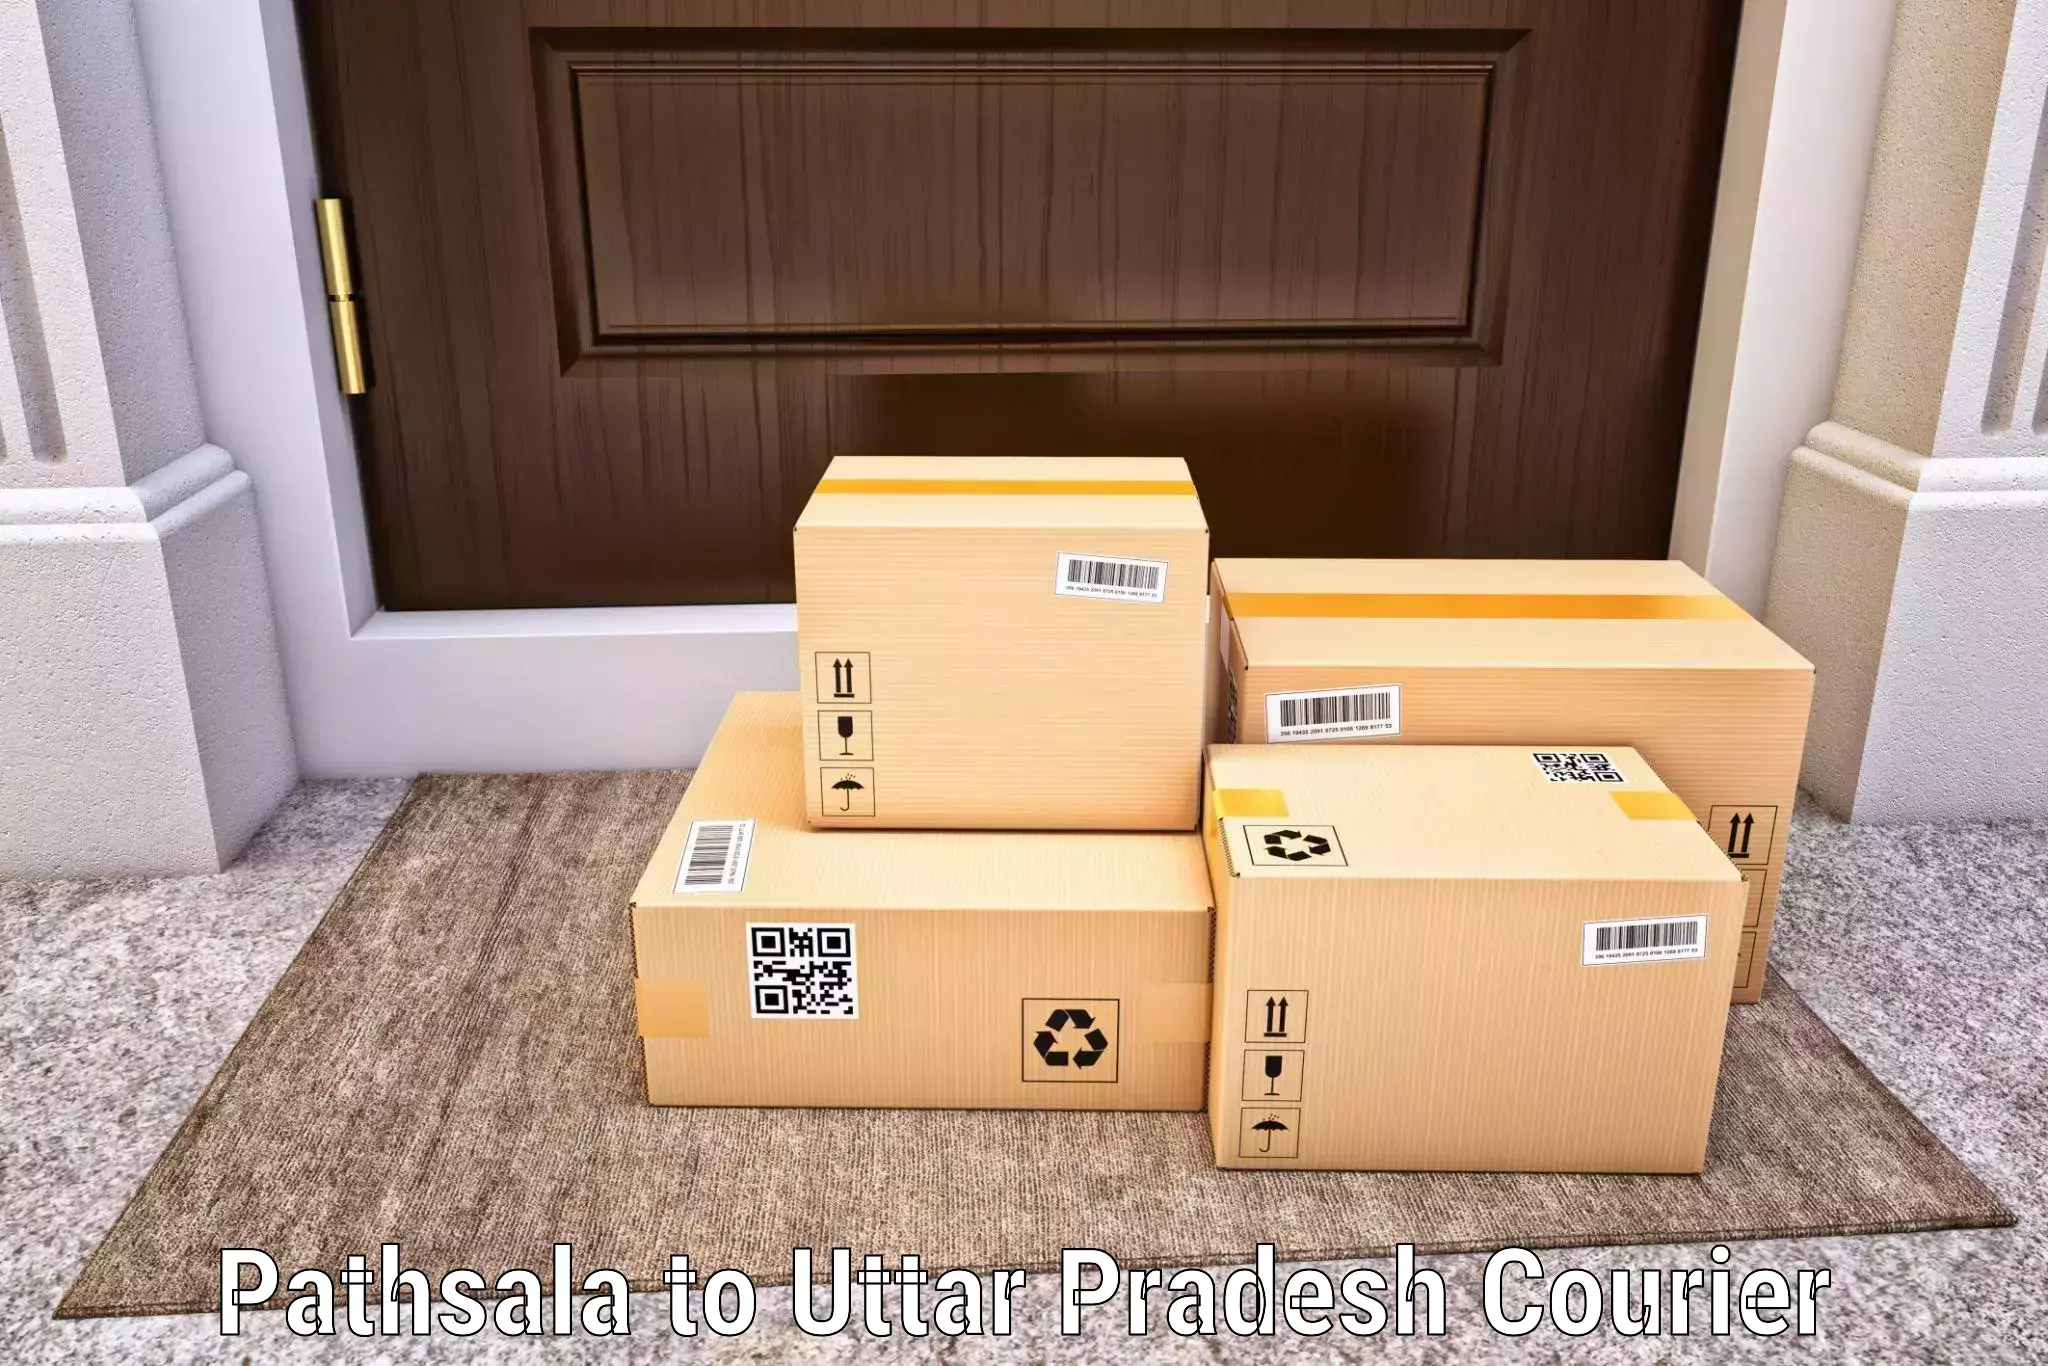 24-hour delivery options Pathsala to Ballia